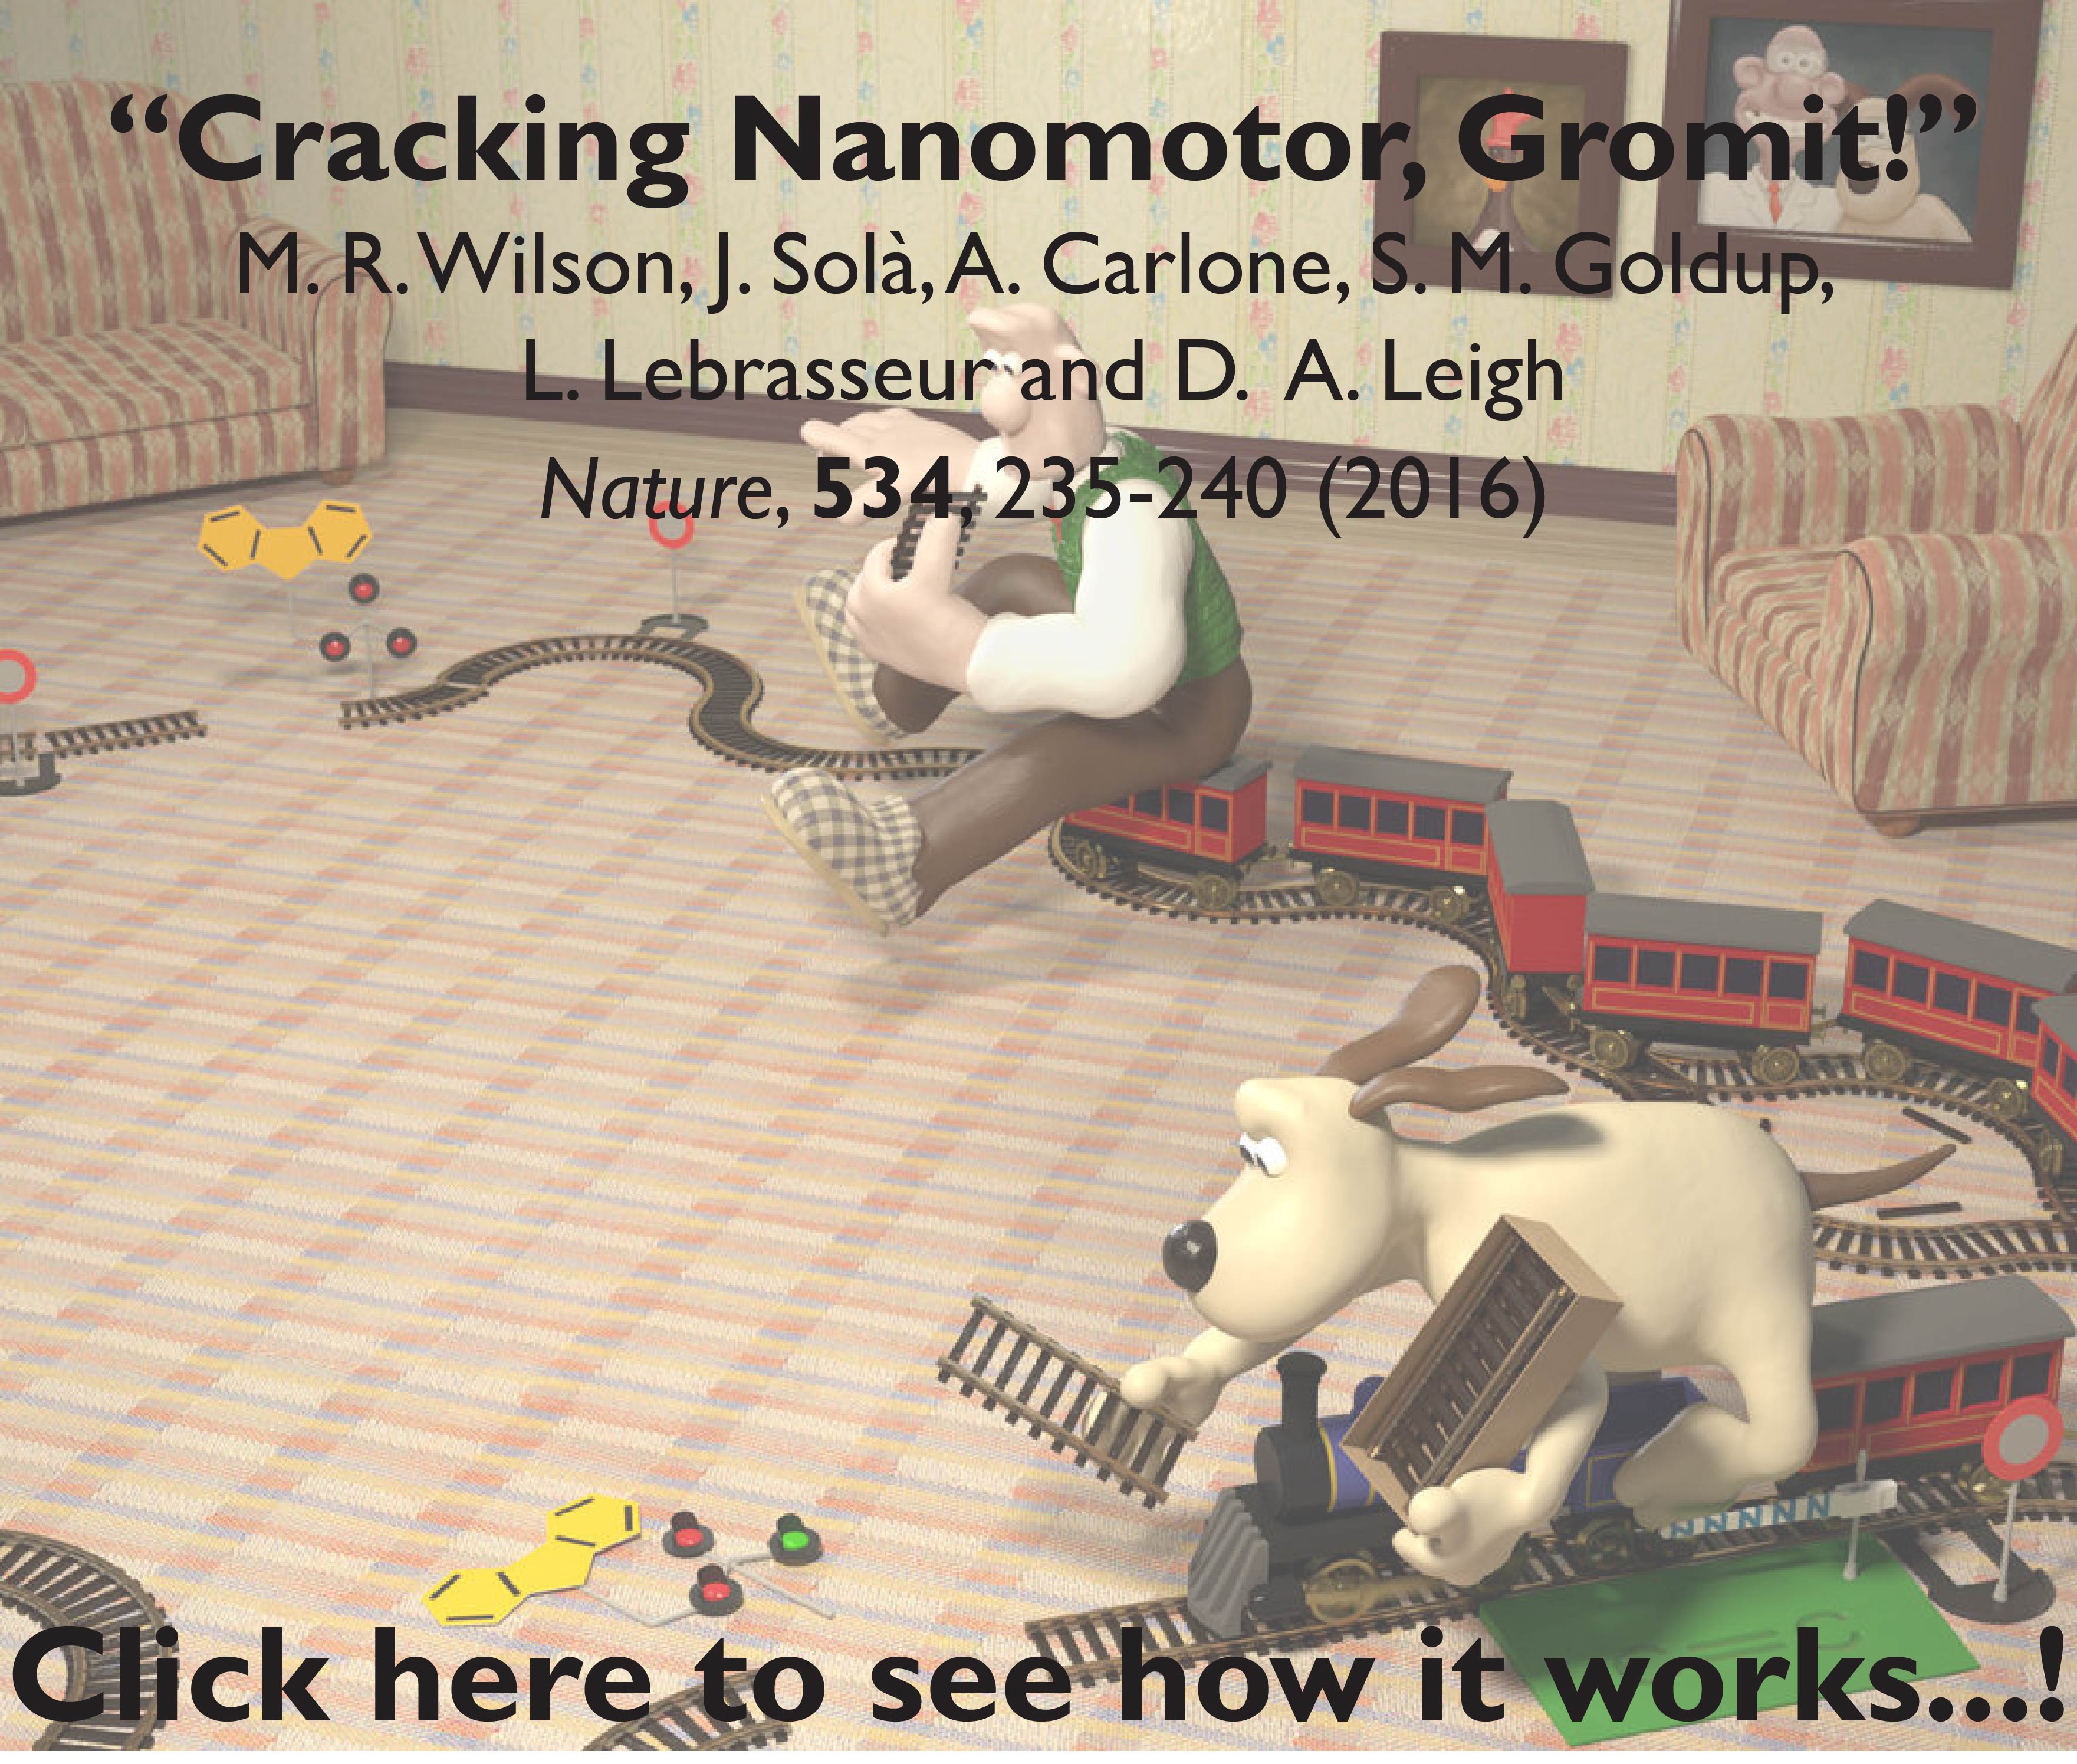 The Nanomotor